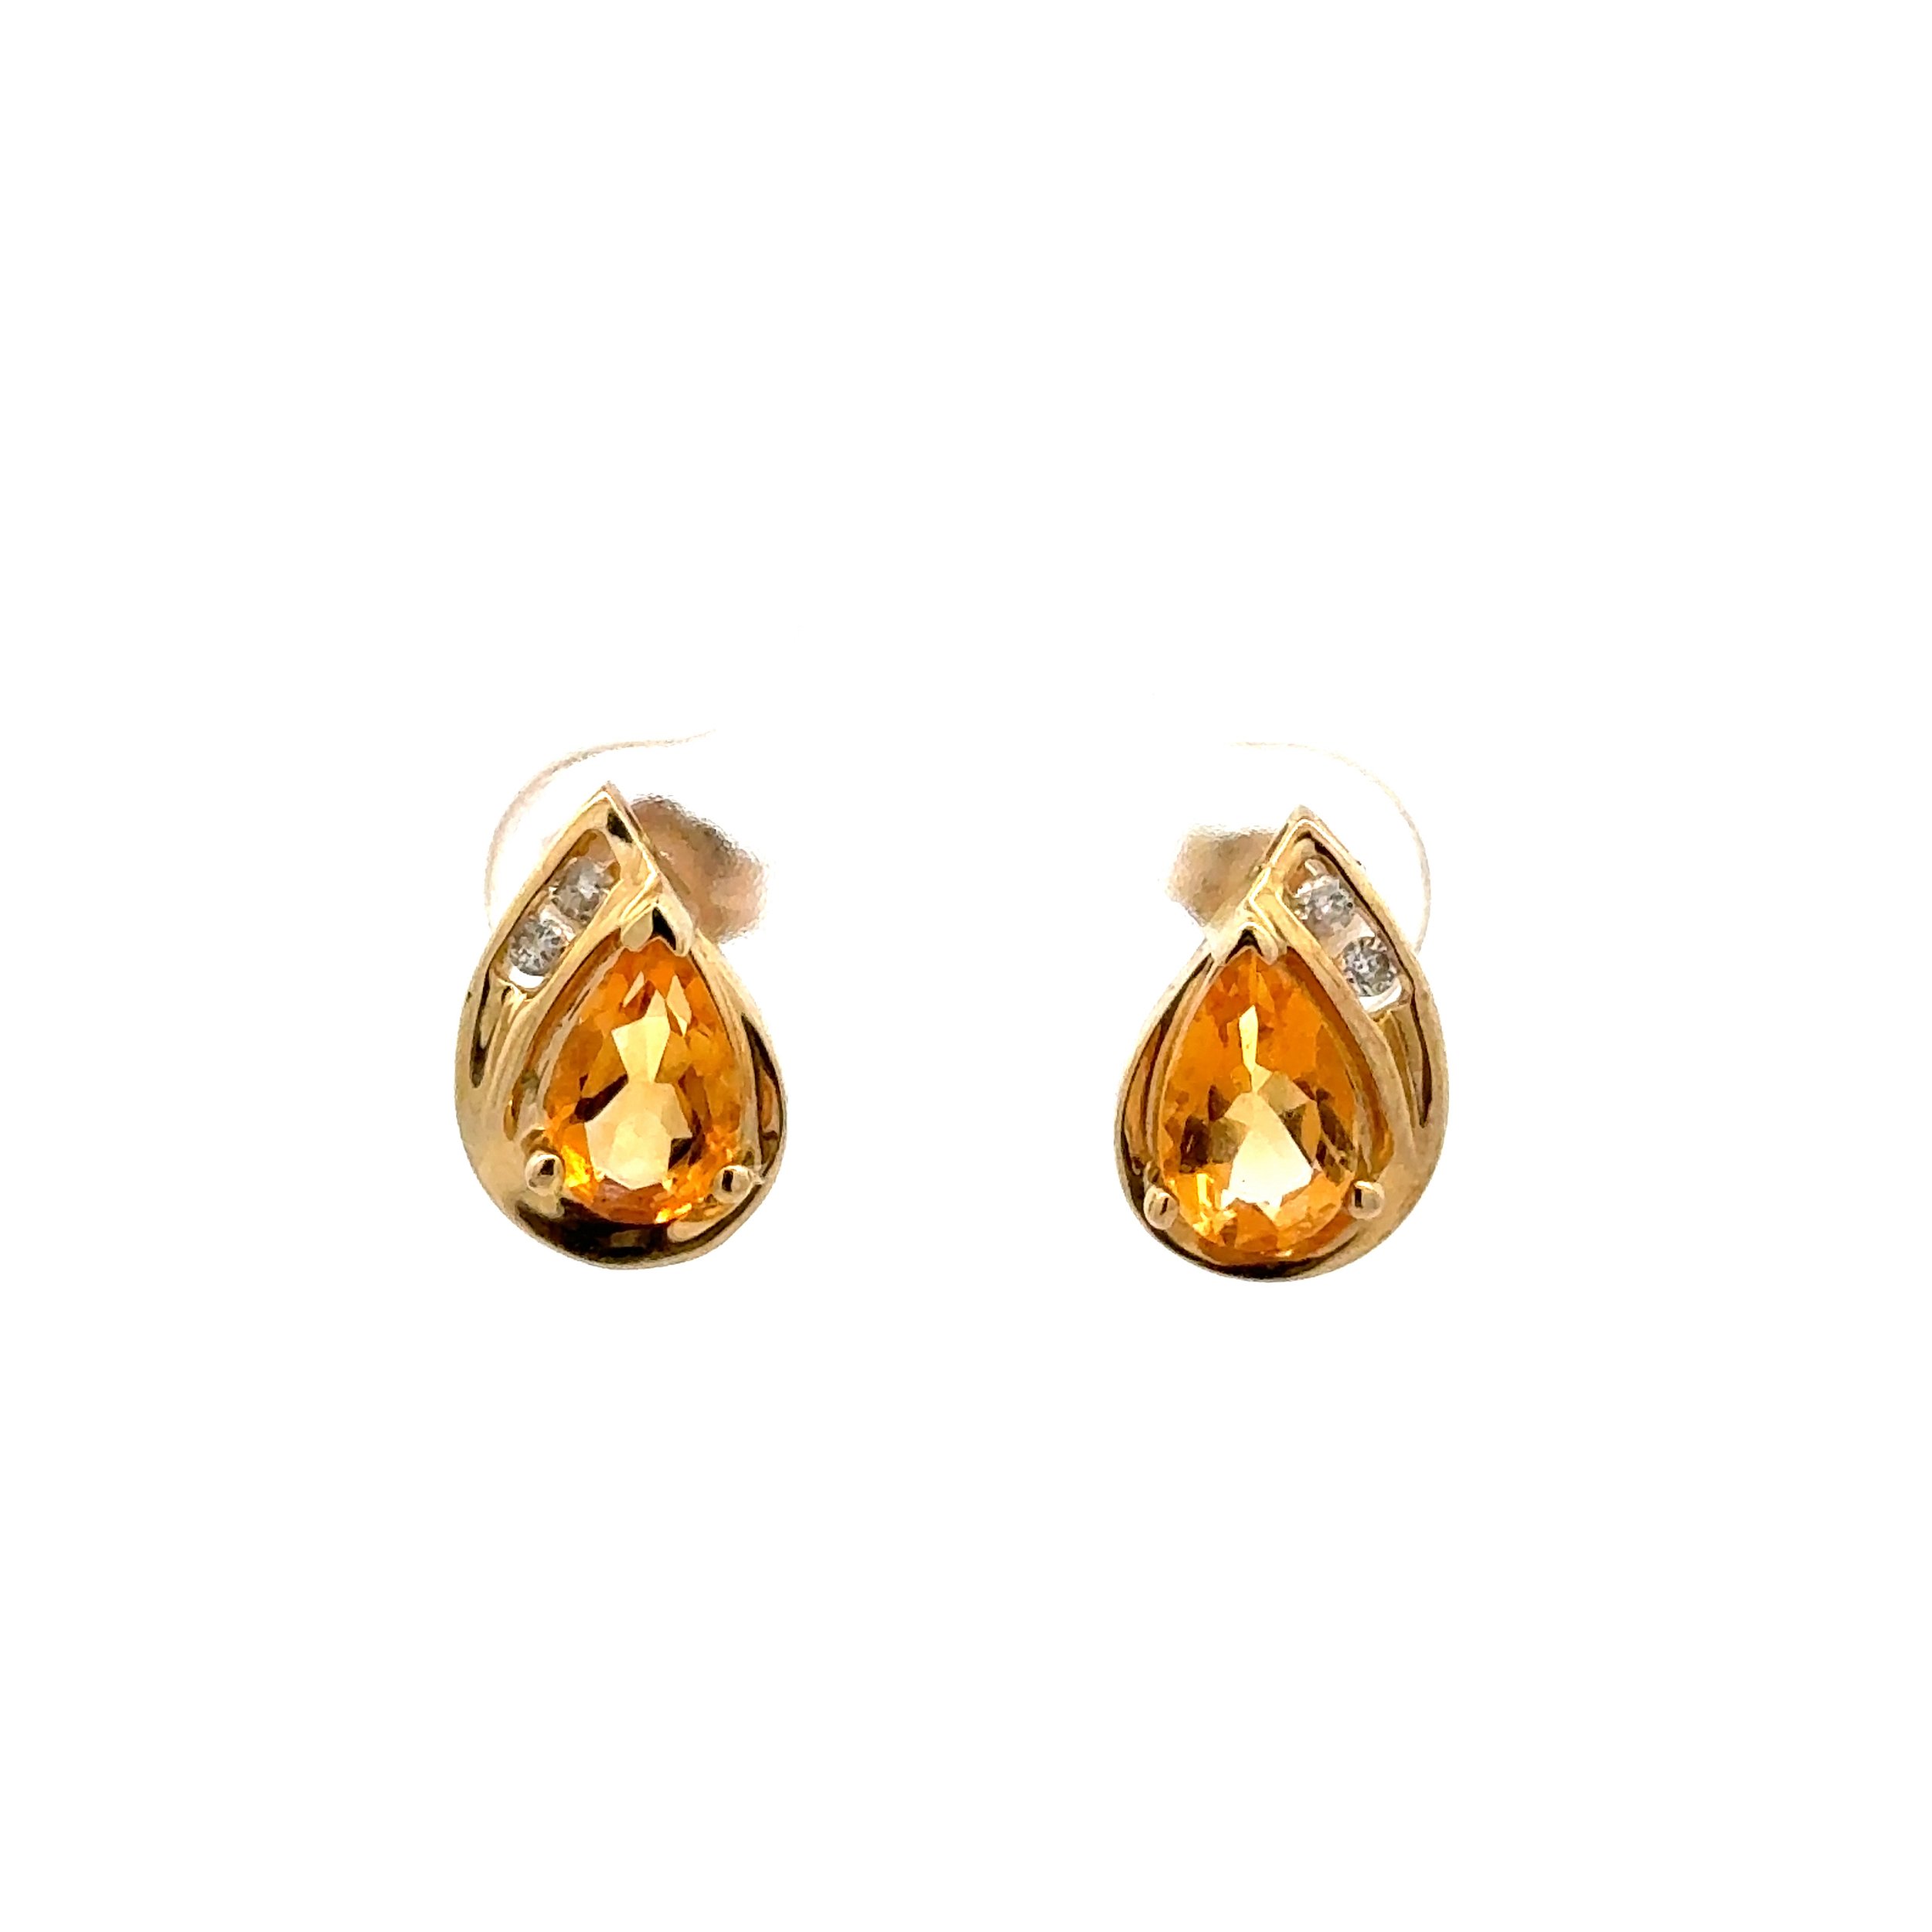 10K YG 1.20tcw Pear Citrine & .04tcw Diamond Earrings on Post 2.5g, .50"